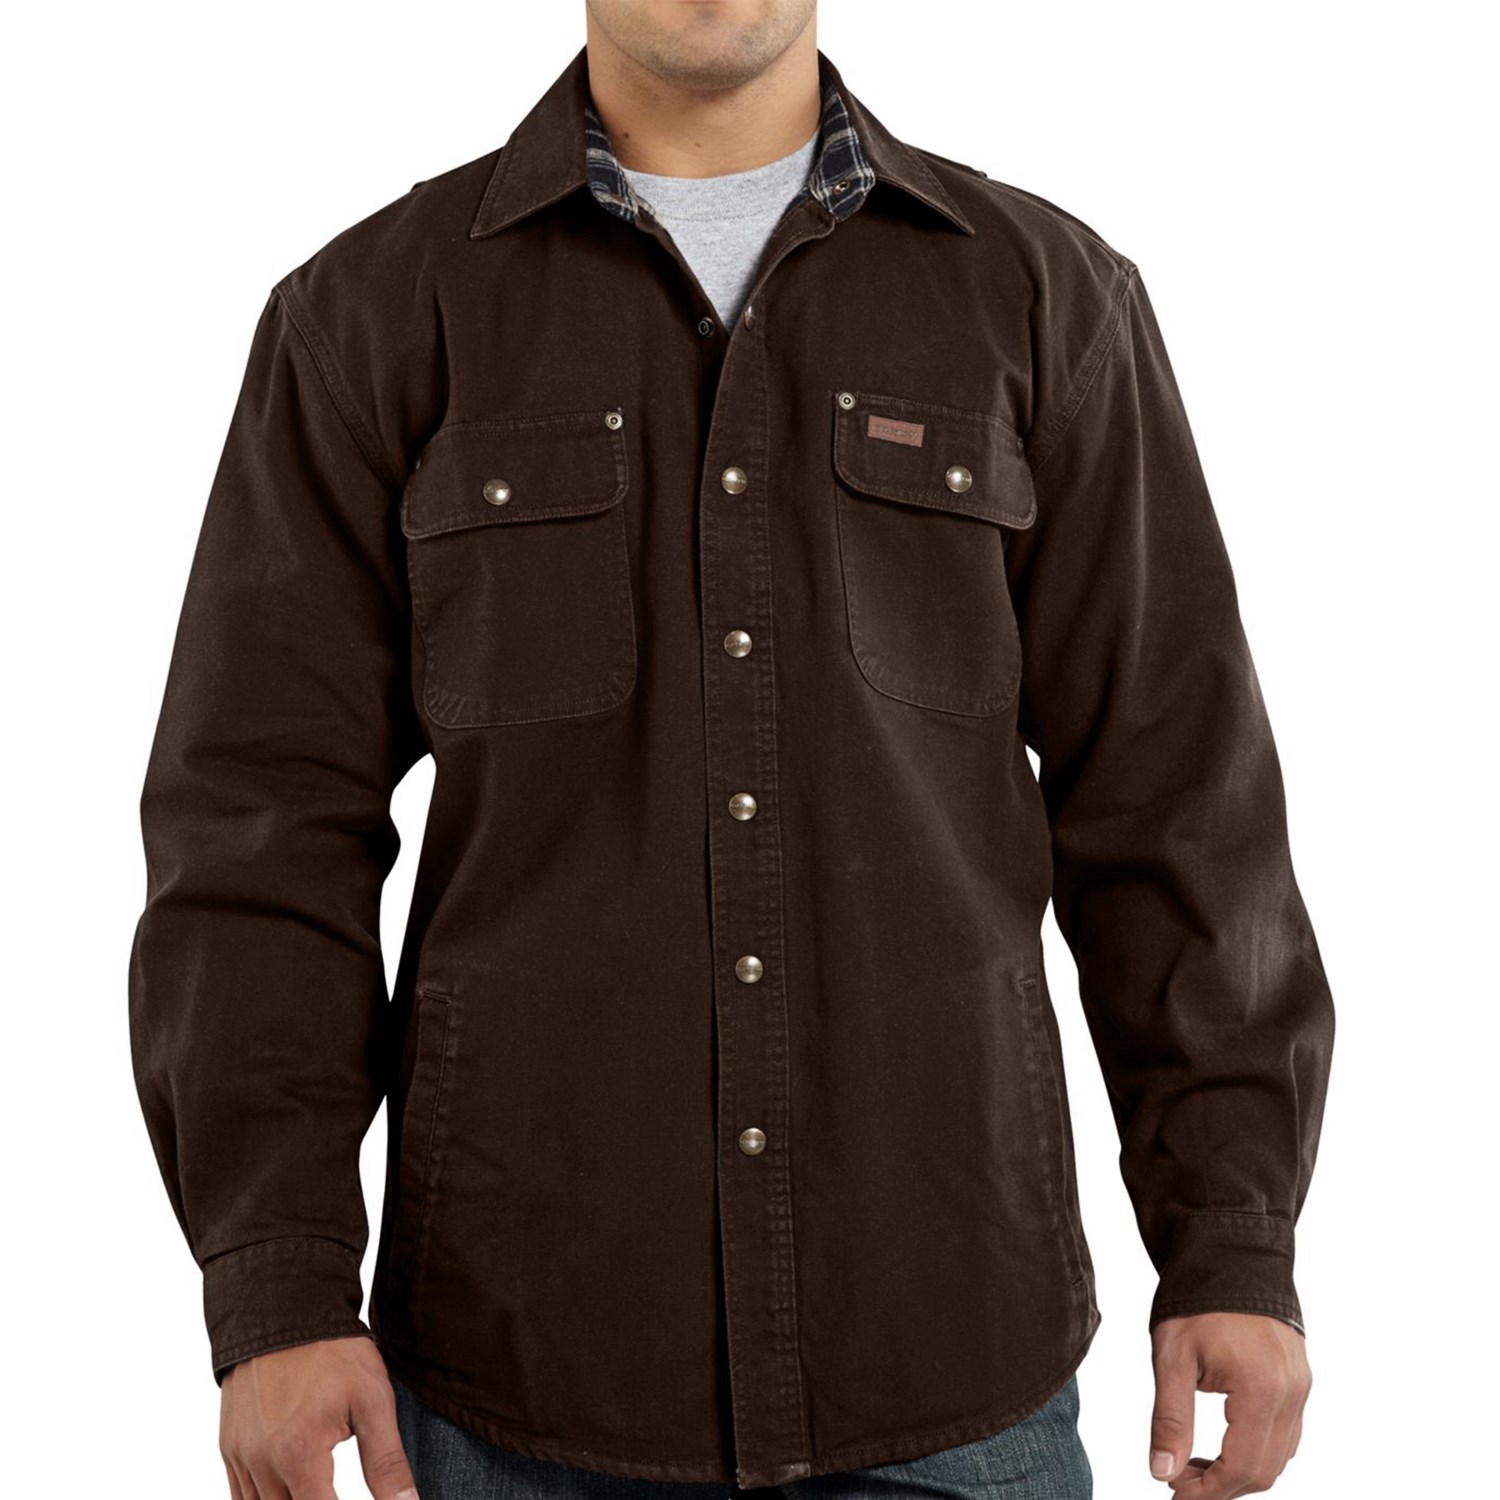 Carhartt Weathered Canvas Shirt Jacket (For Tall Men)